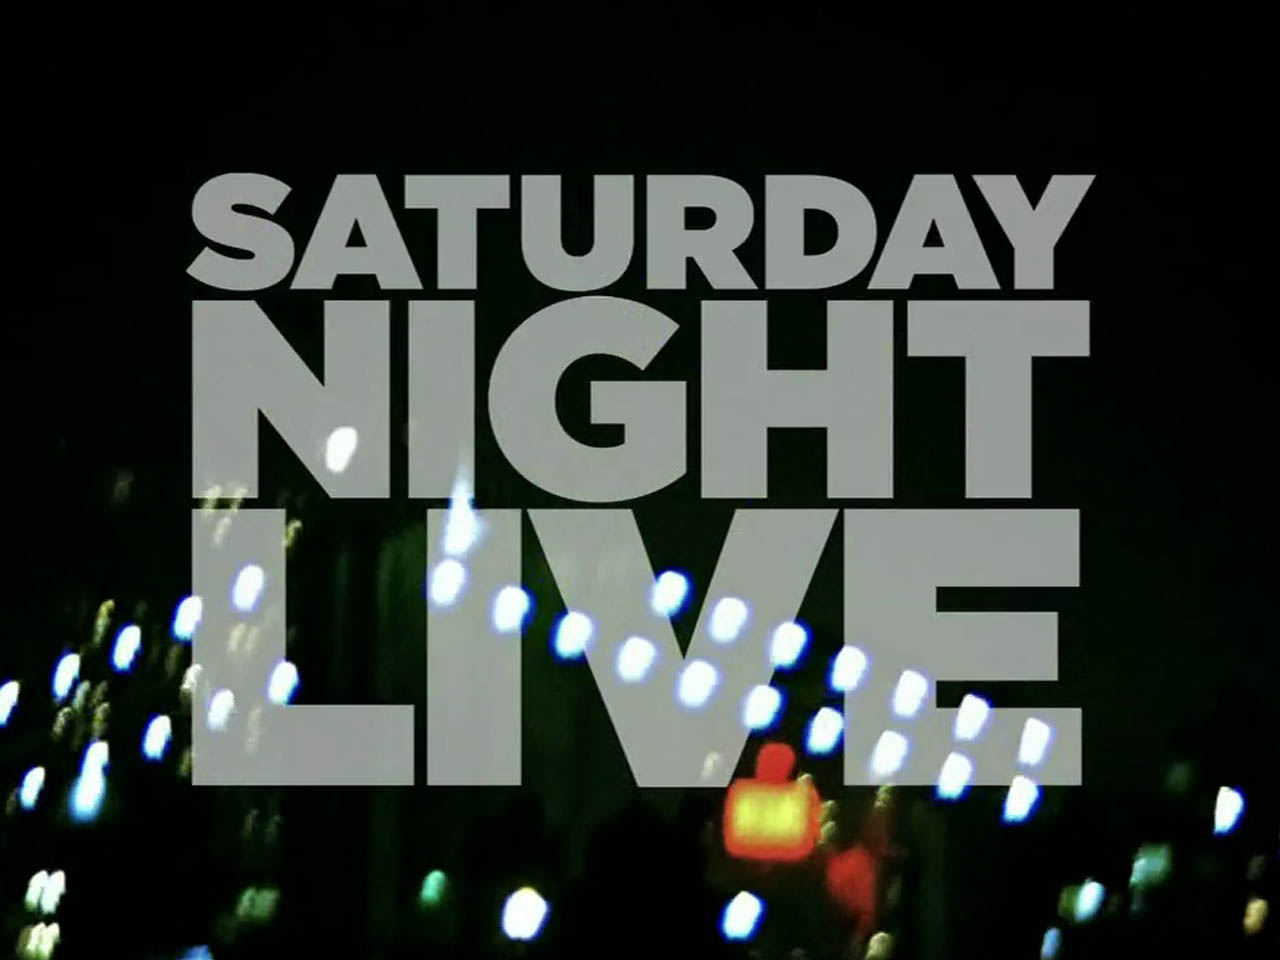 Live night up. On Saturday Night или at Saturday Night. Saturday Night Live шрифт.